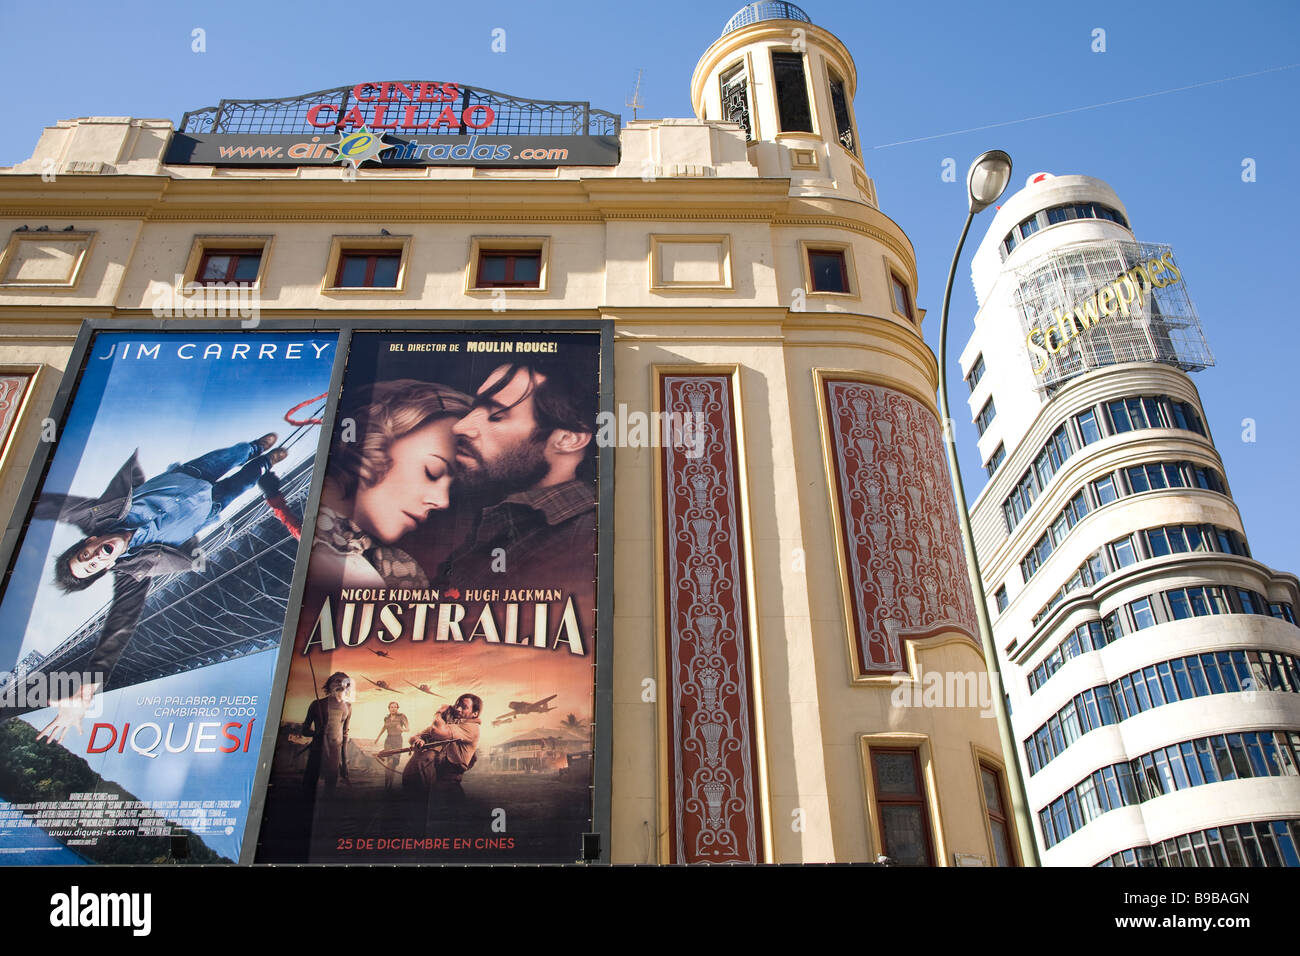 Cines Callao en Plaza Callao, Madrid, Spain Stock Photo - Alamy